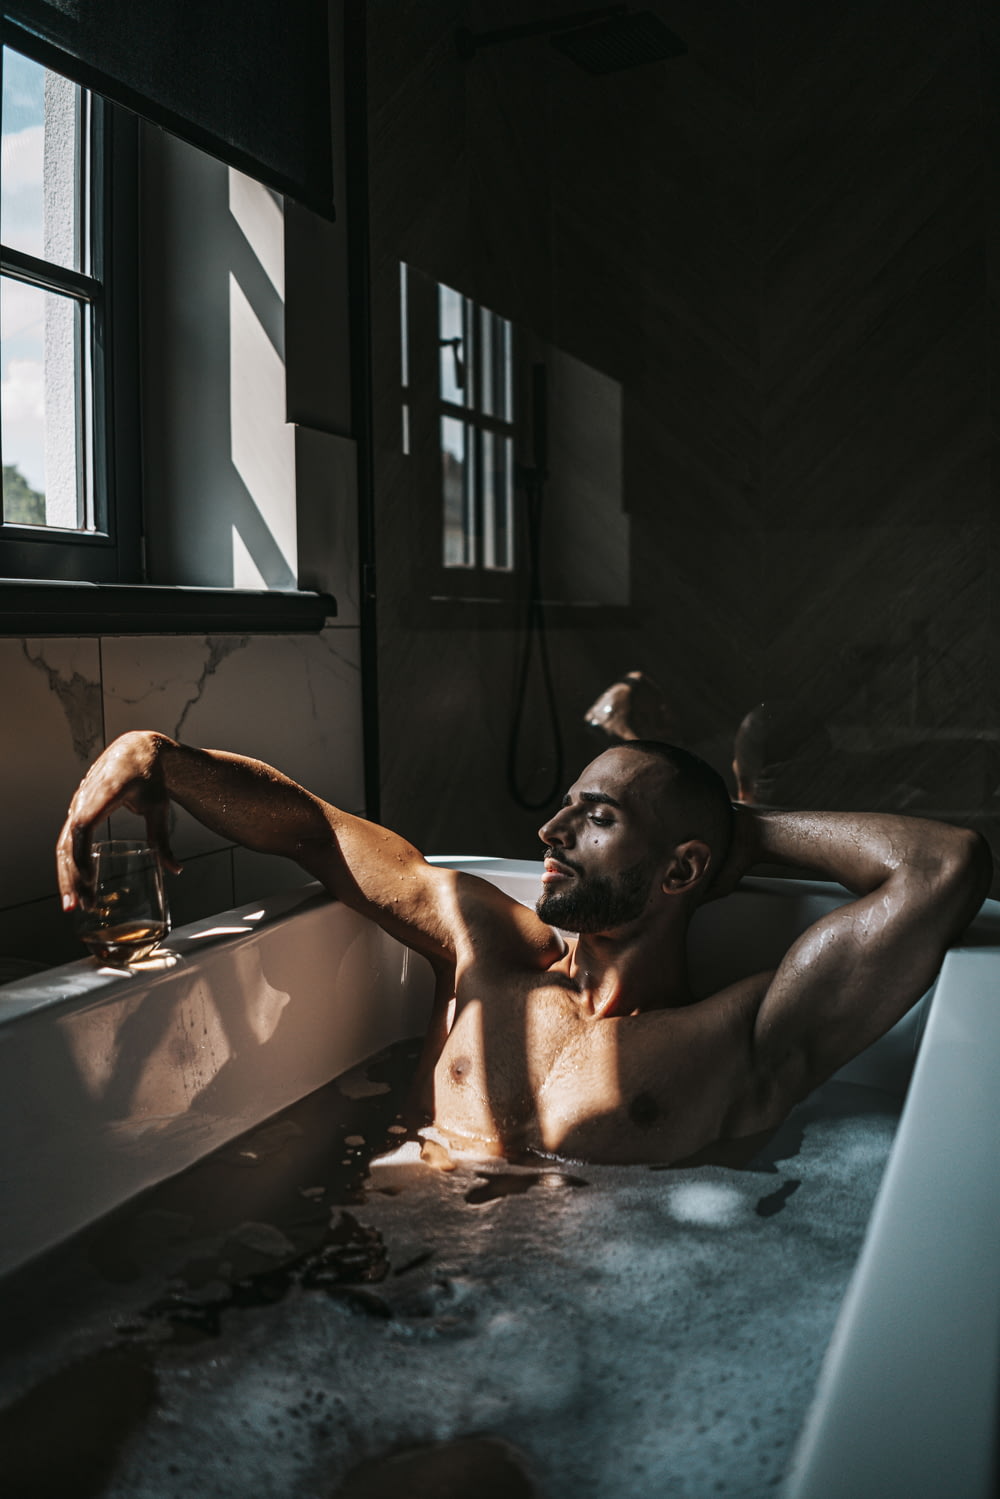 a man sitting in a bathtub with a glass of wine